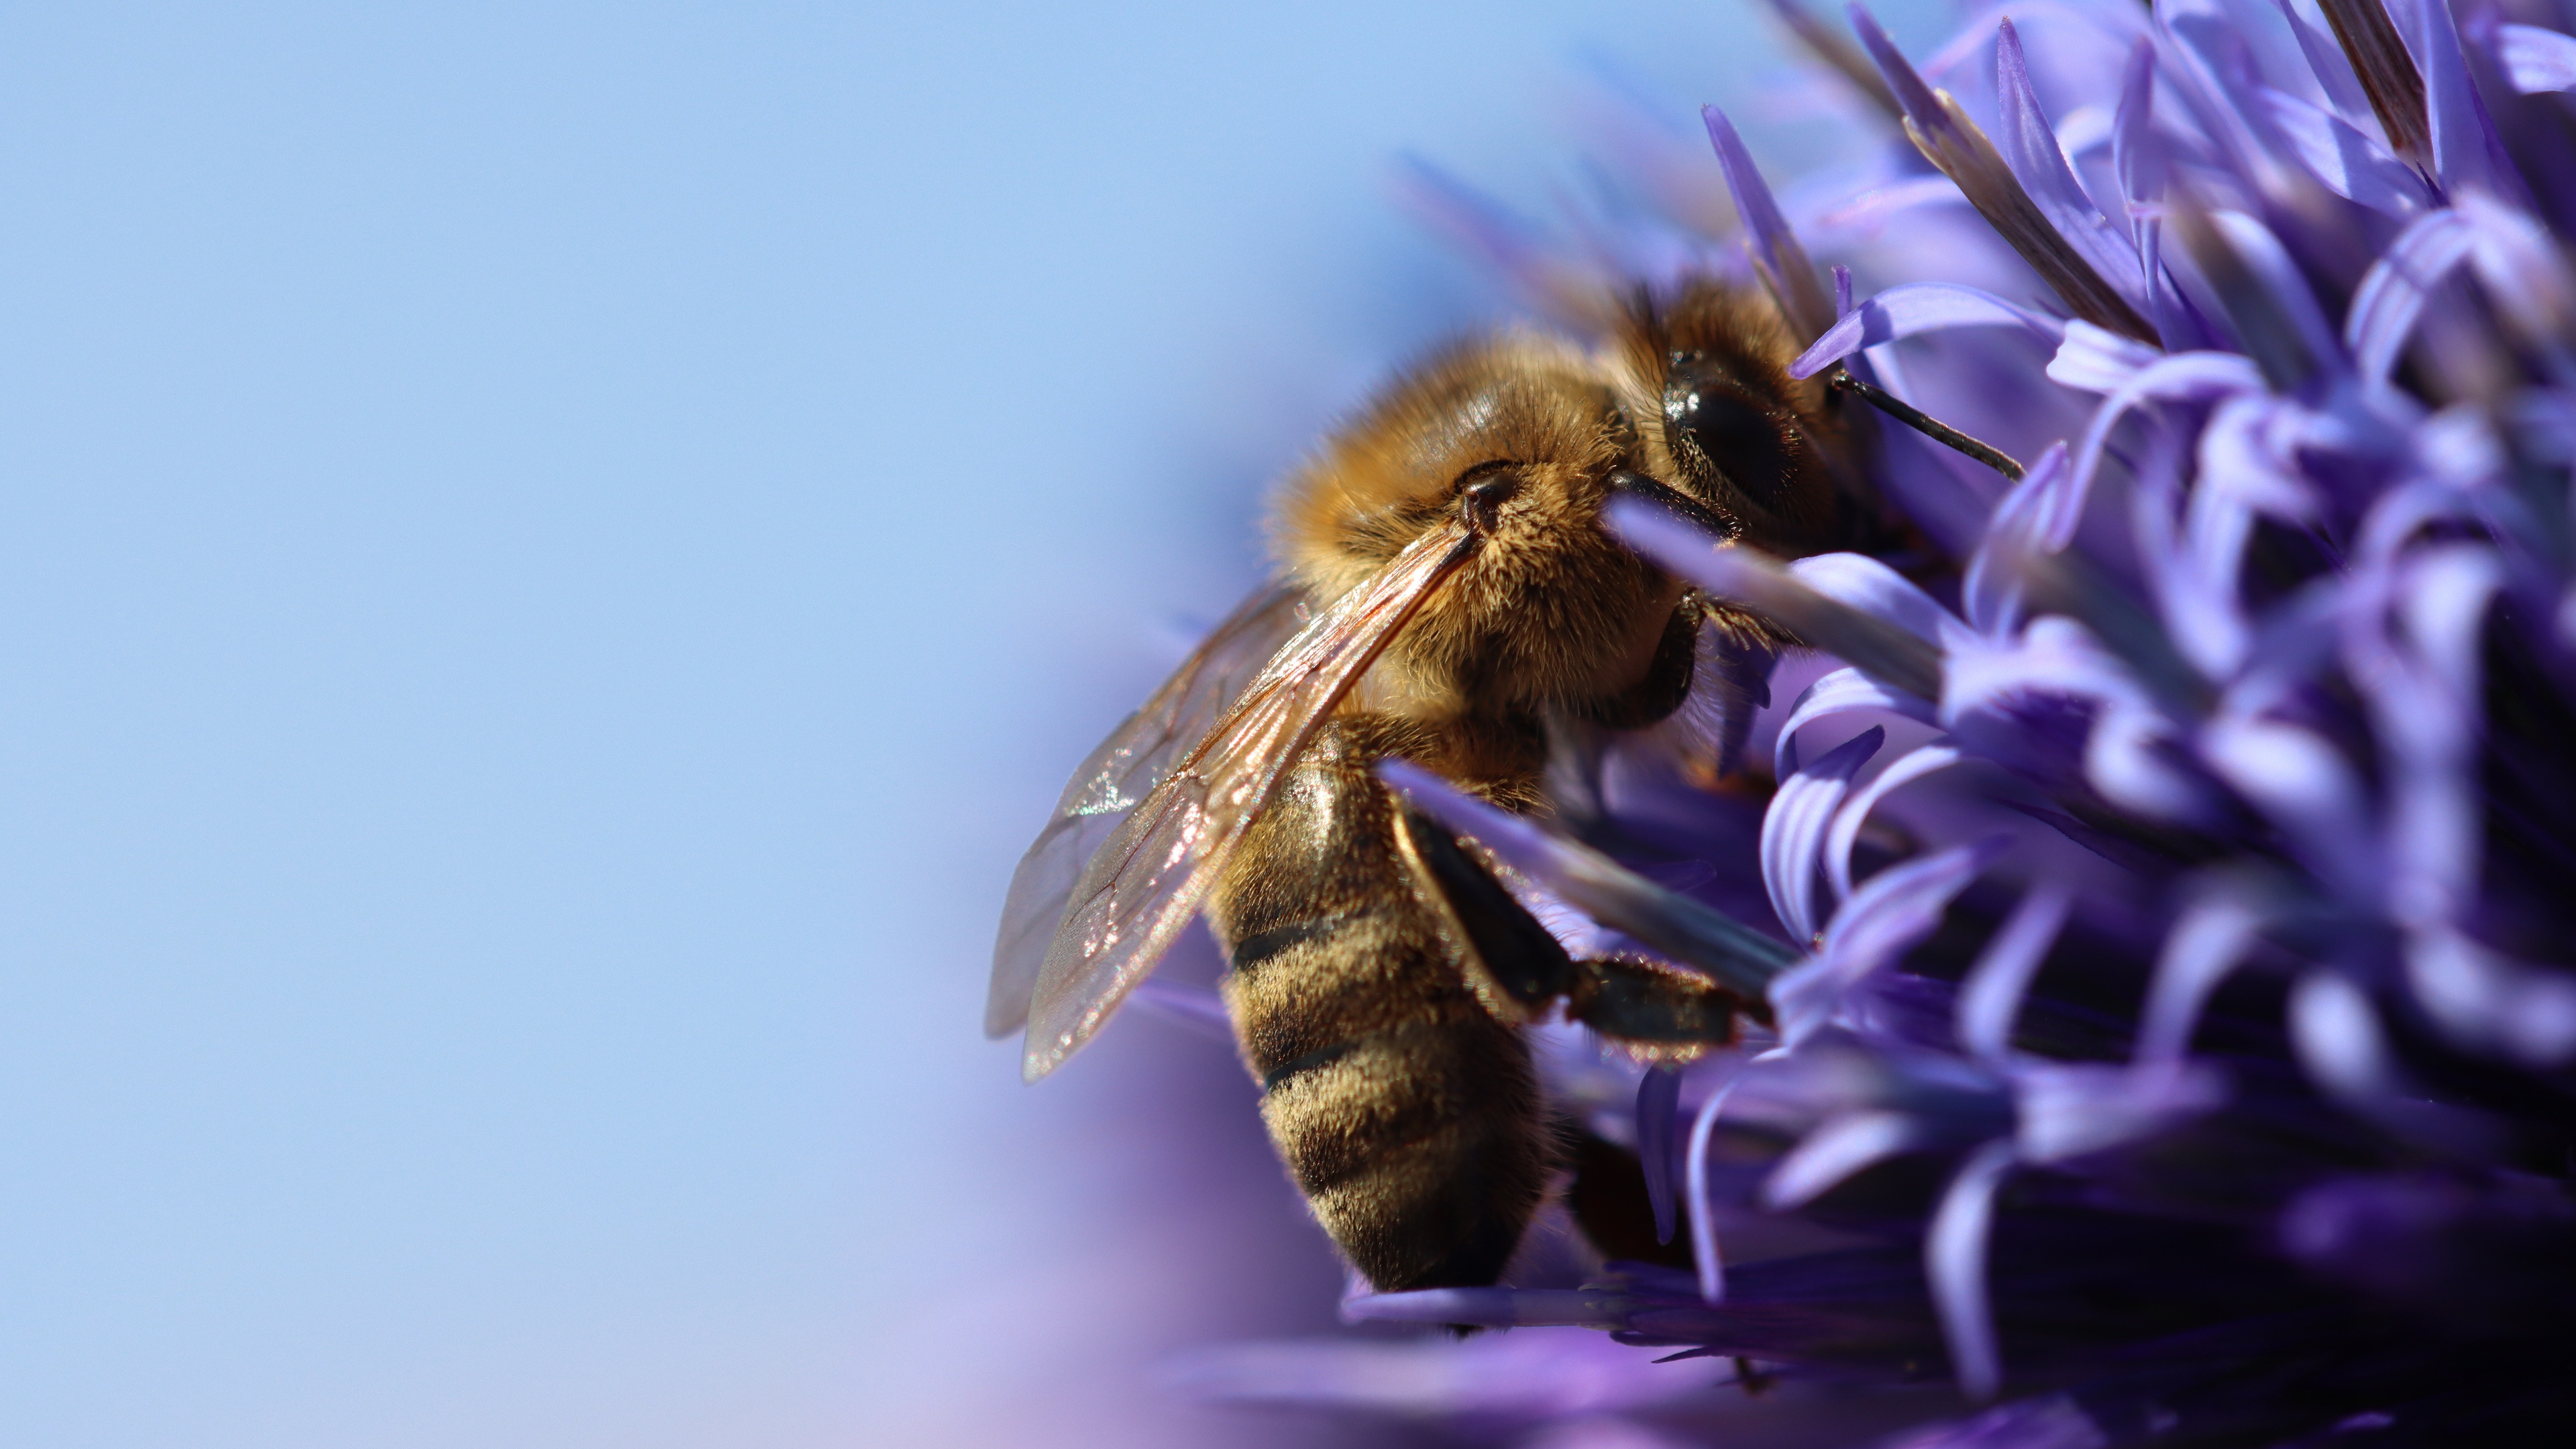 Handy-Wallpaper Tiere, Insekten, Blume, Makro, Biene kostenlos herunterladen.